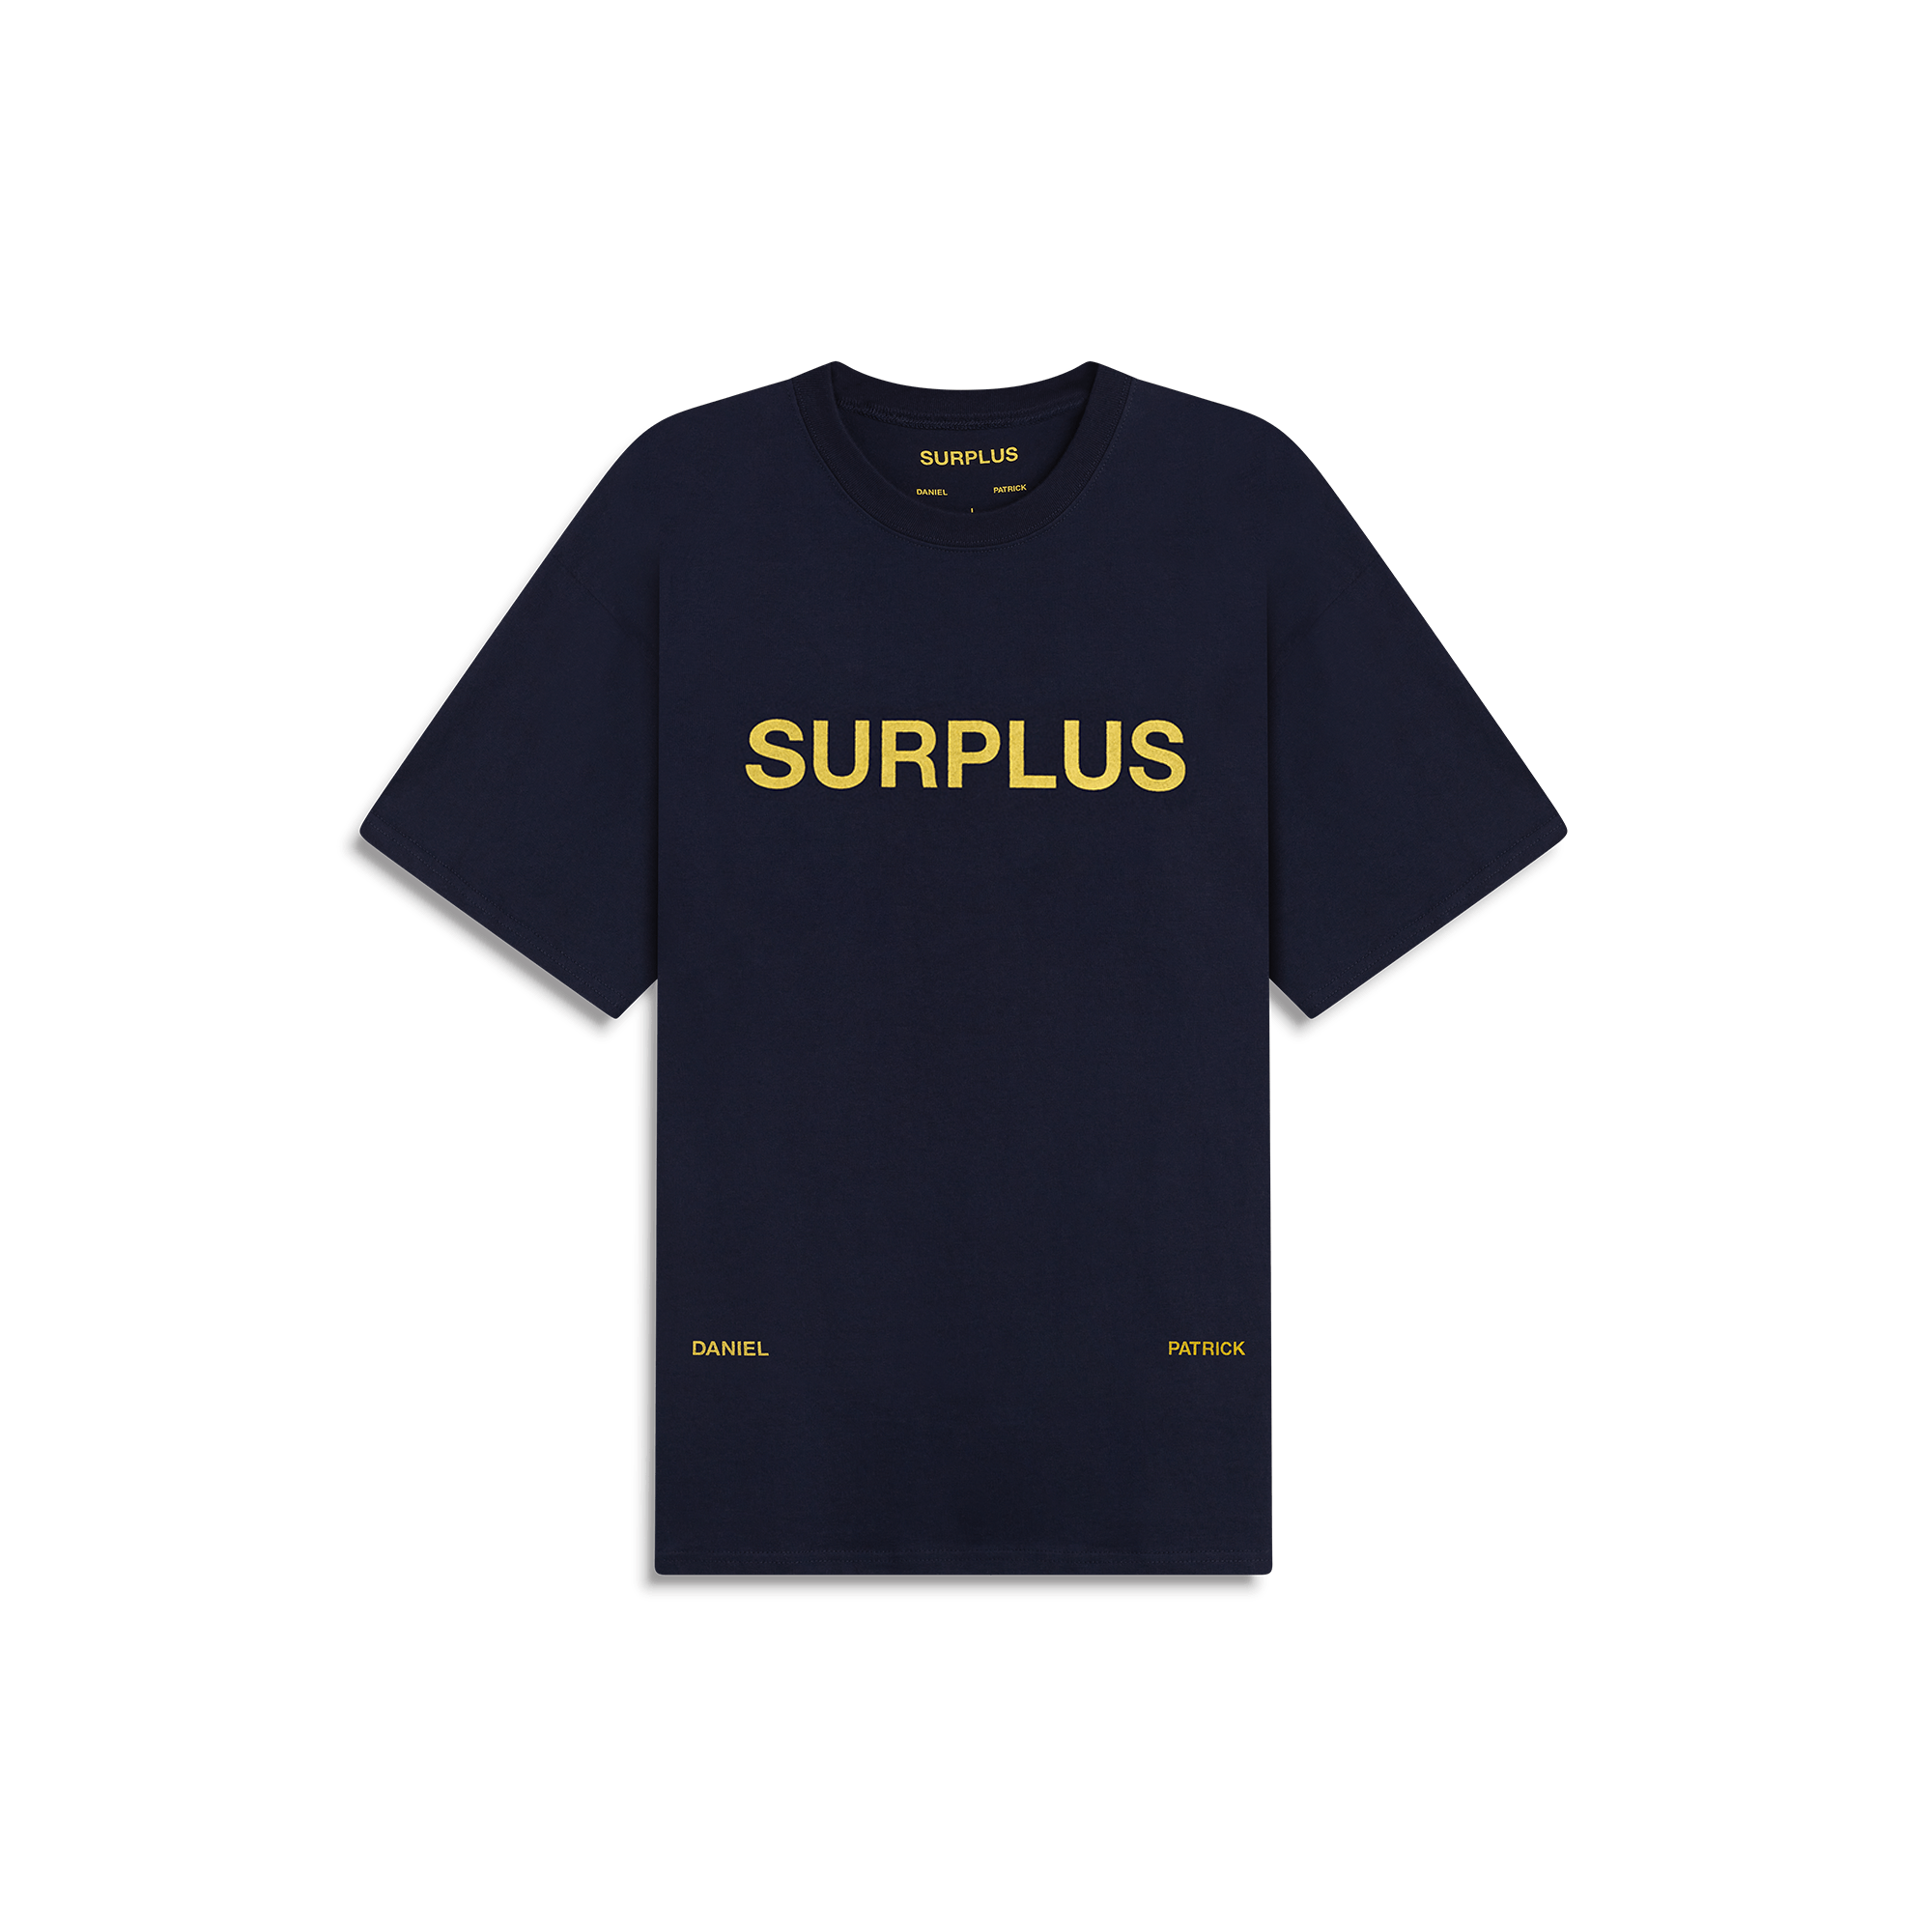 Surplus Logo Tee in Navy/Yellow